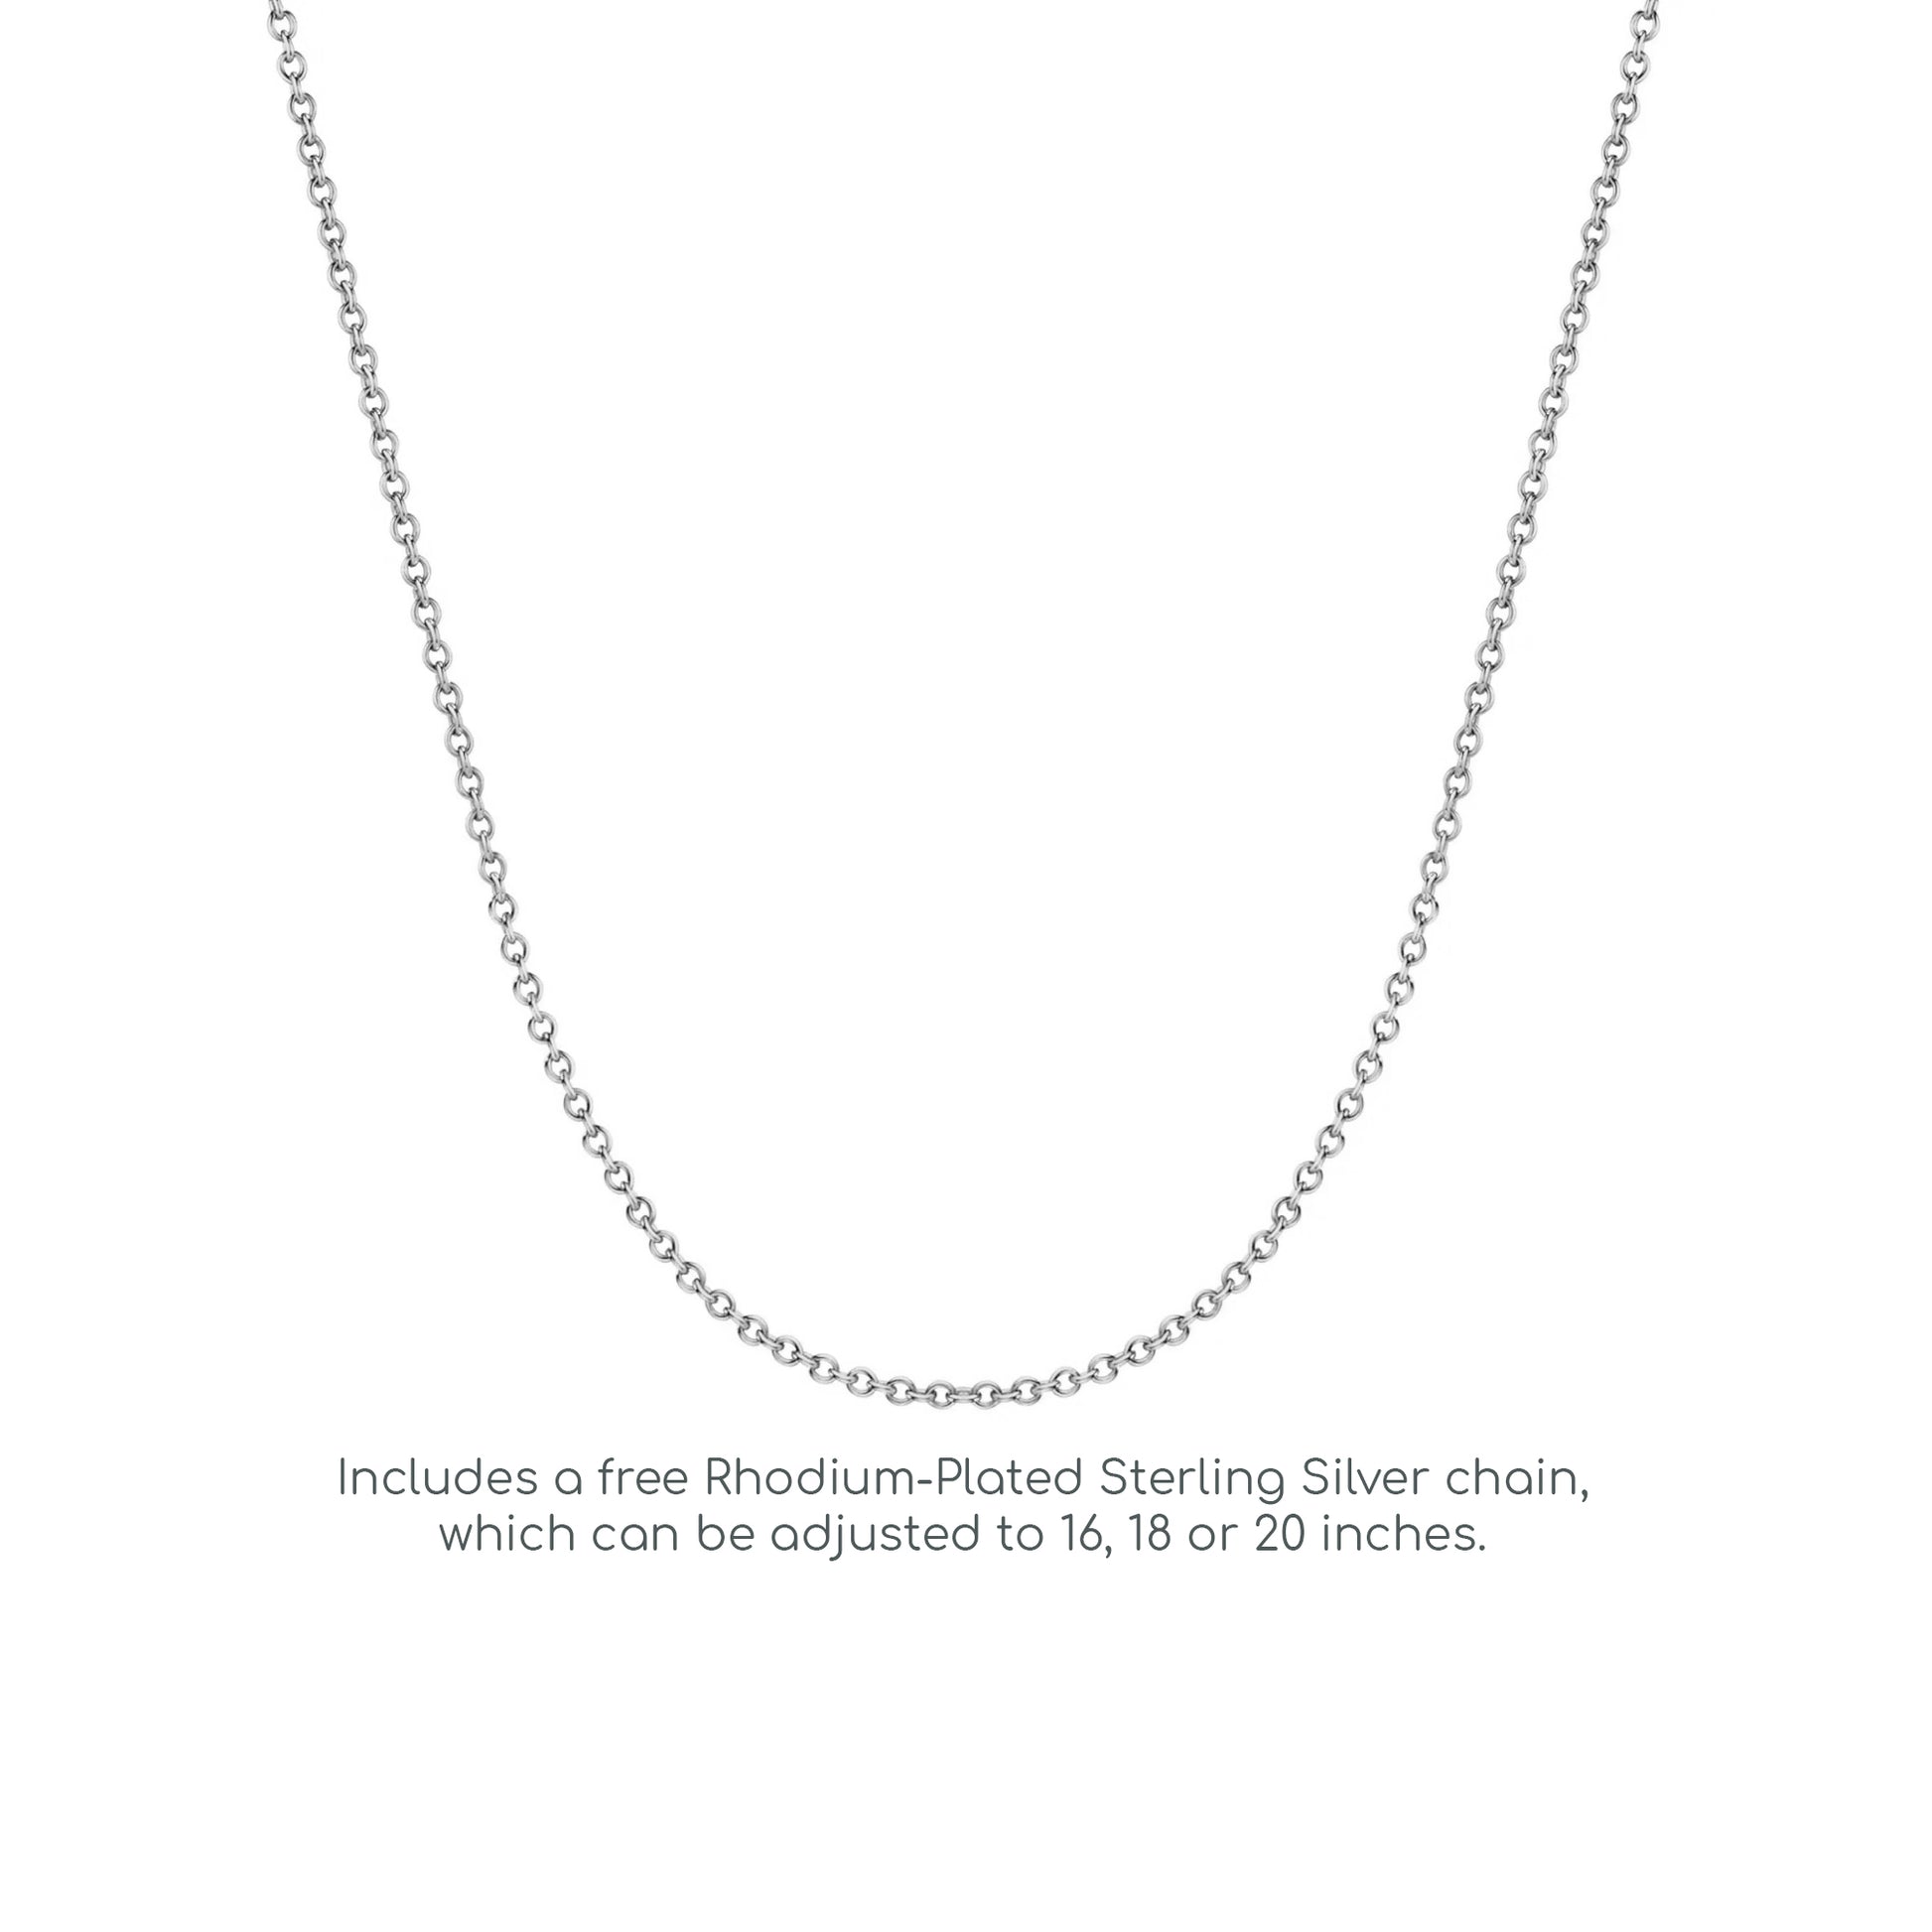 Silver  CZ Pave Cross Pendant Necklace 18 inch - GVX037